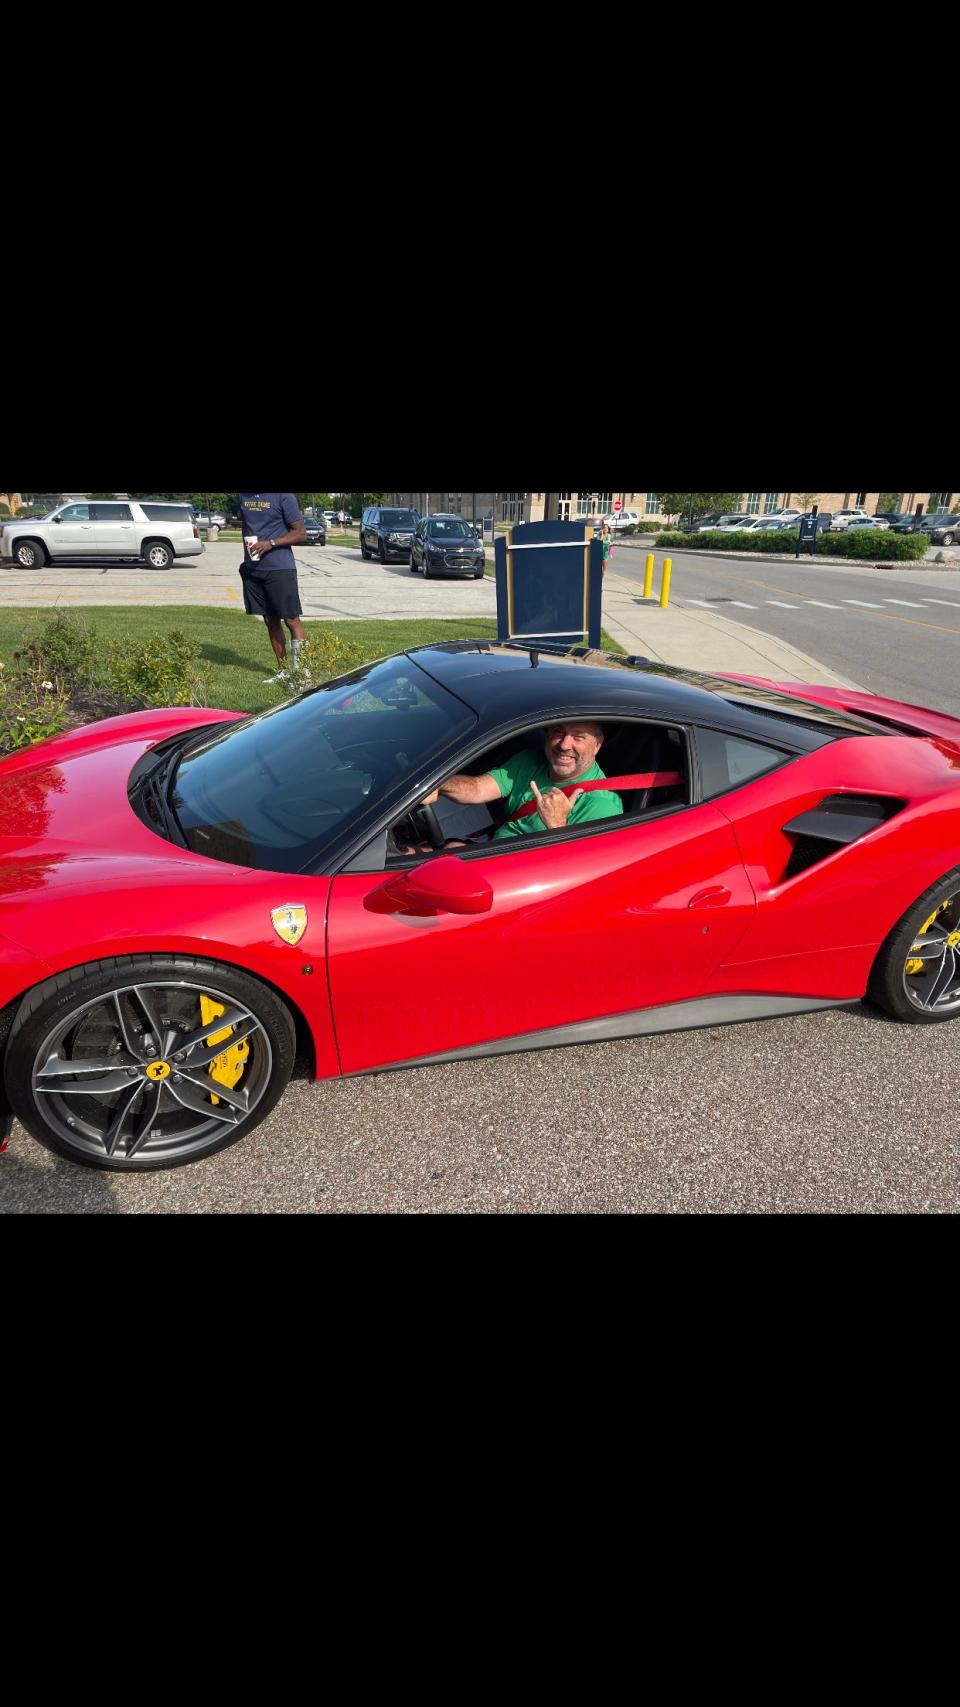 Mike Brey arrives at Rolfs Hall in a Ferrari